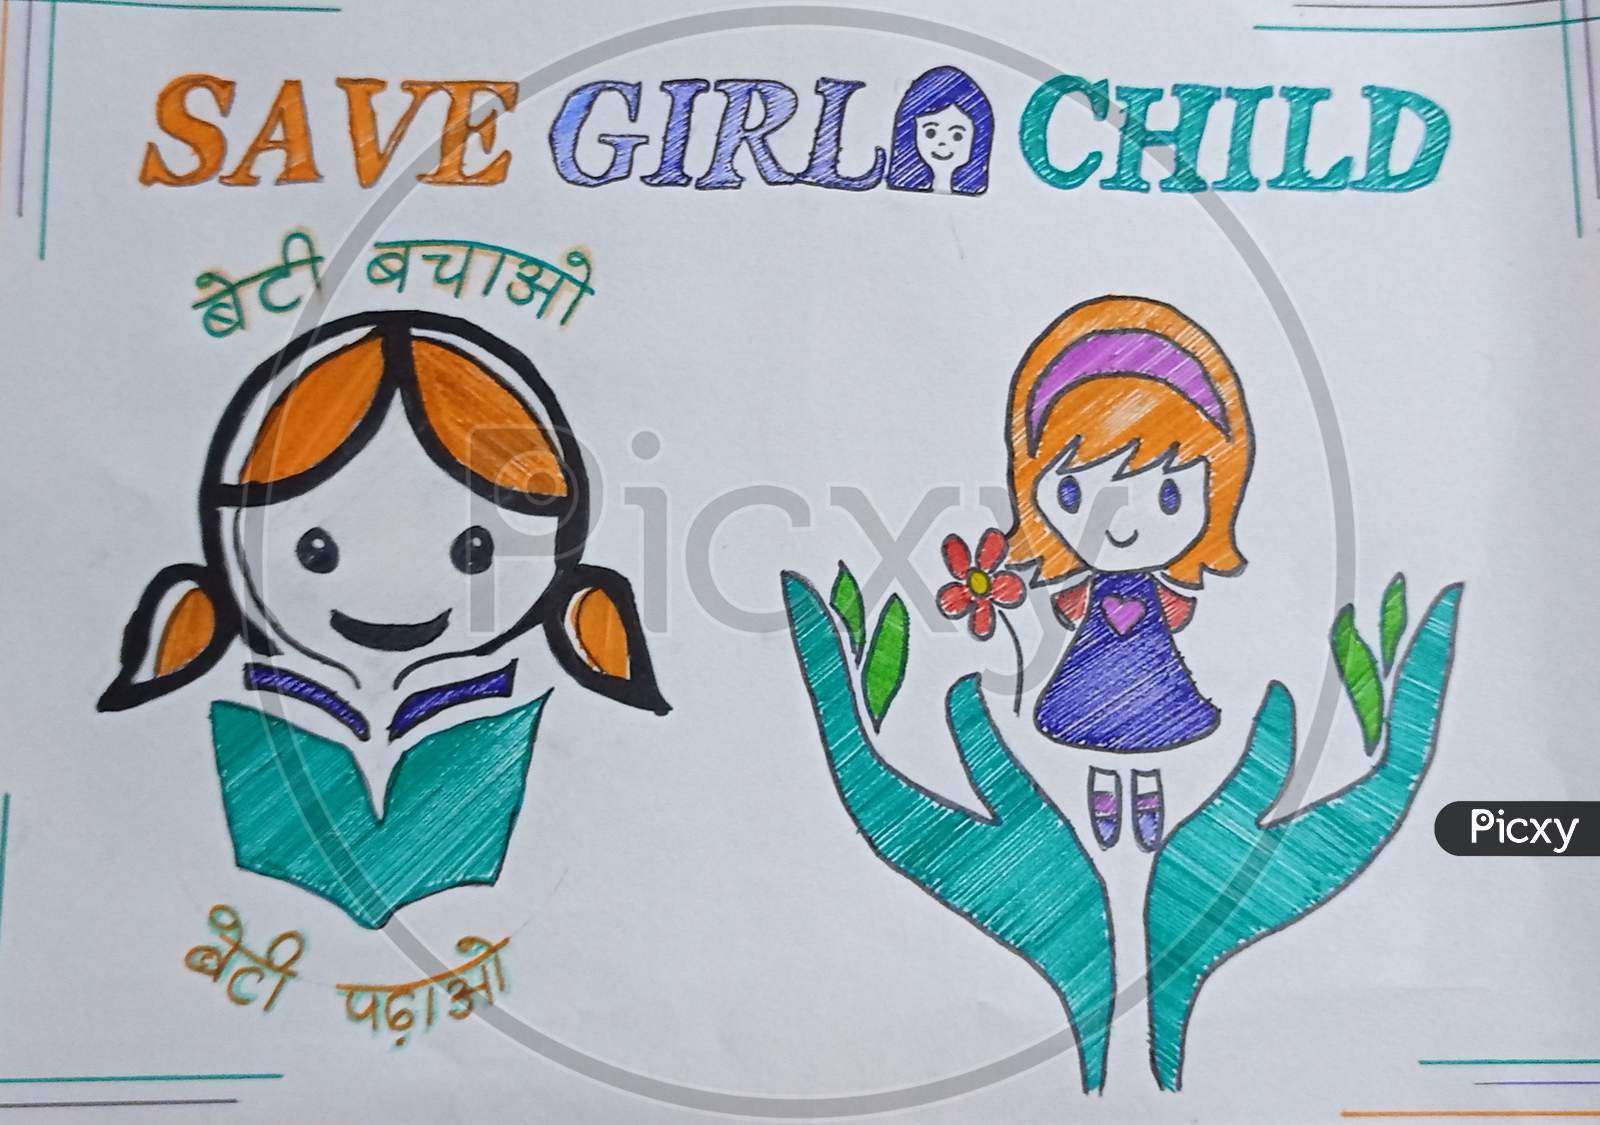 Pencil Sketch On Save Girl Child  DesiPainterscom